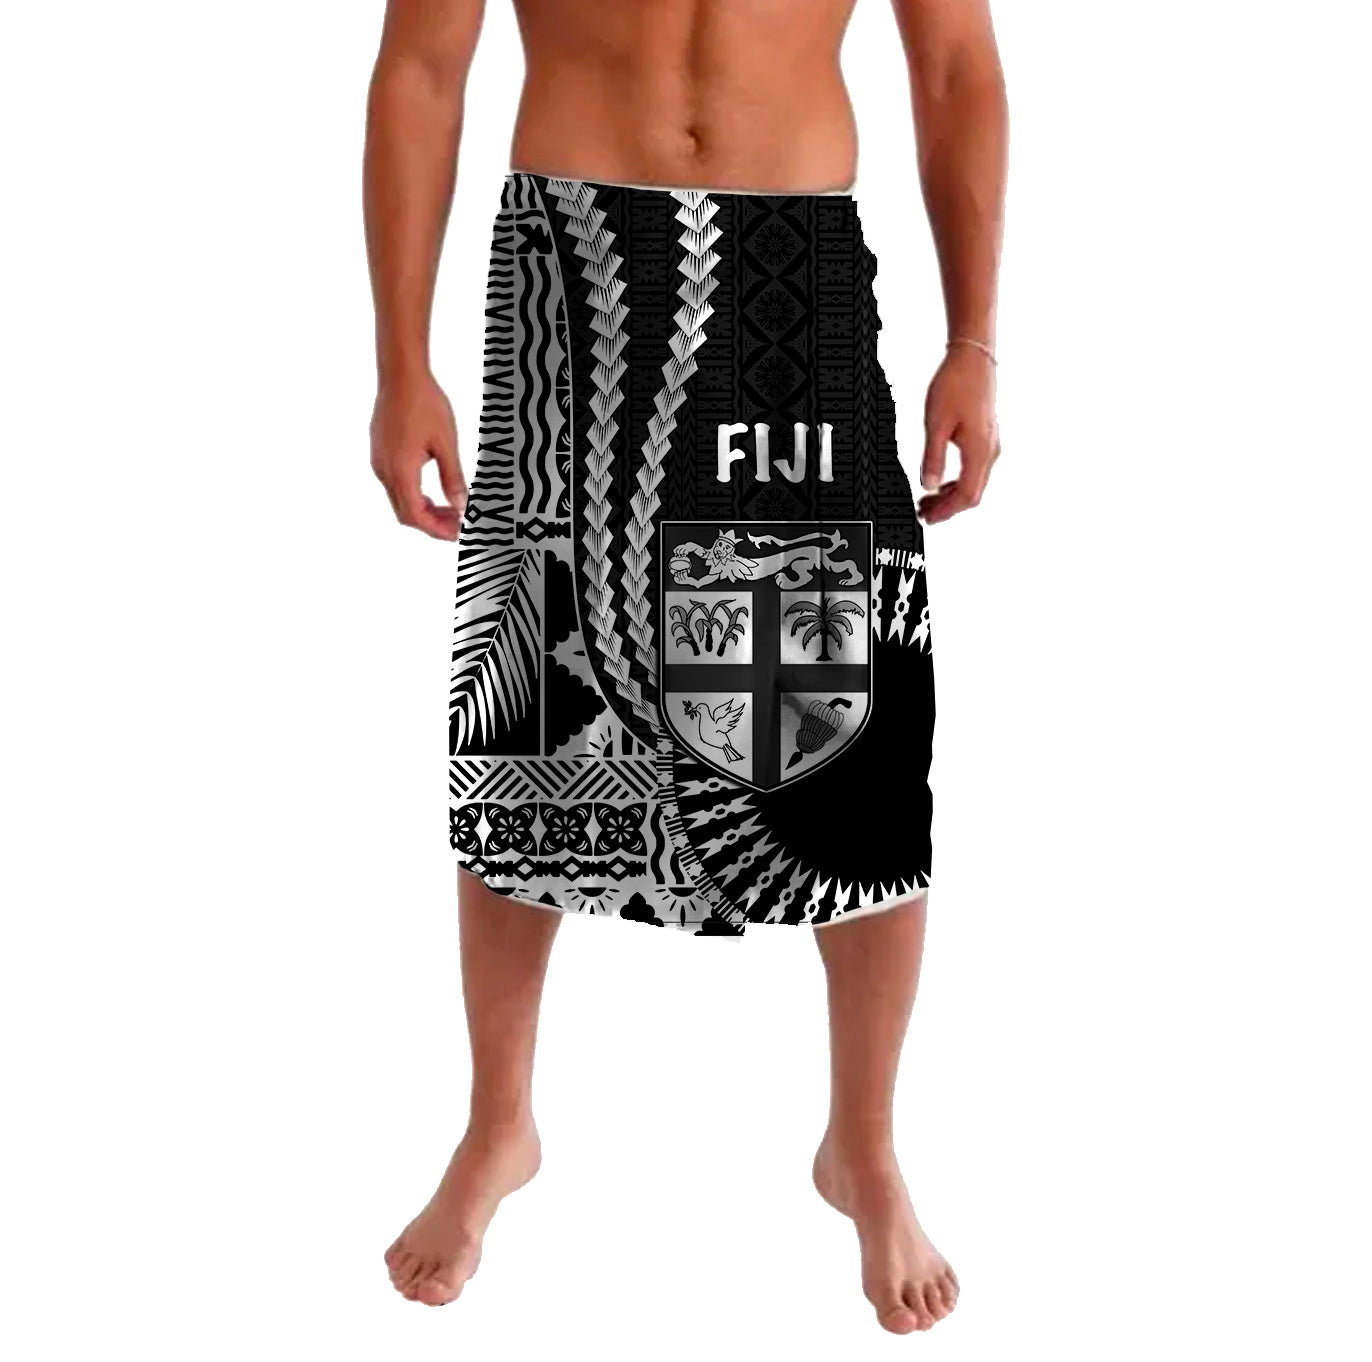 Fiji Lavalava Masi Tapa Patterns Black Style LT6 Lavalava Black - Polynesian Pride